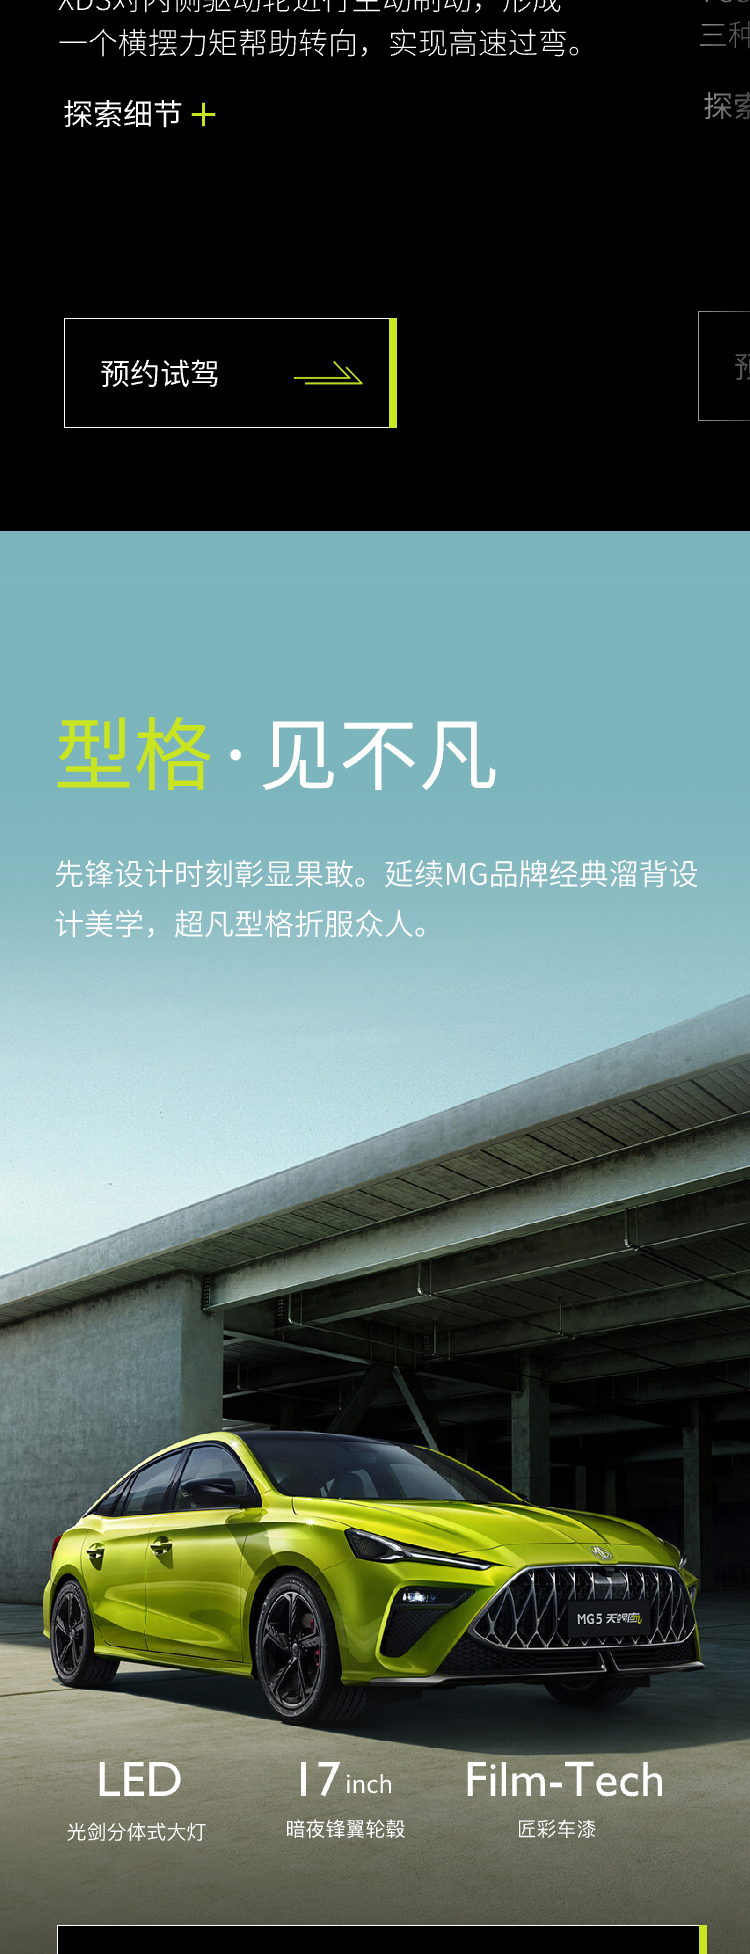 MG5 天蝎座设计- 上汽集团MG名爵官网-MG ONE-名爵5-MG6 PRO-年轻代言人